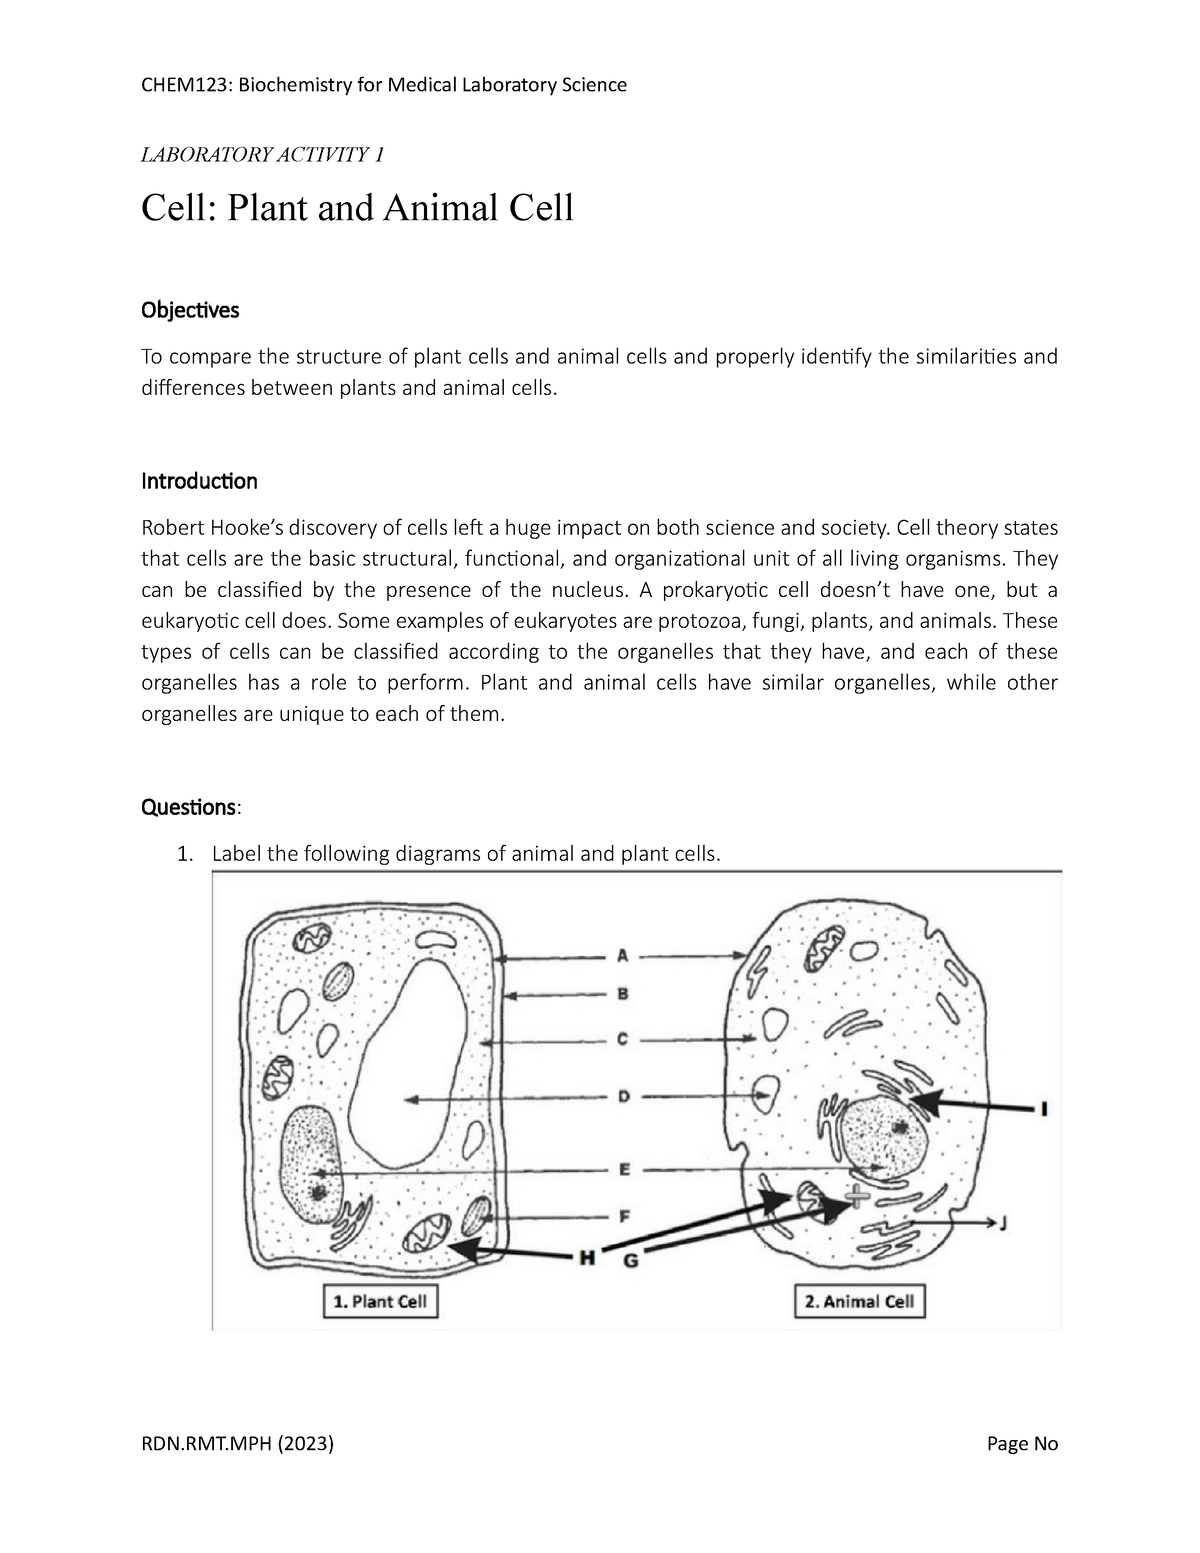 CHEM 123 Prelim Lab Activities 1 - LABORATORY ACTIVITY 1 Cell: Plant ...